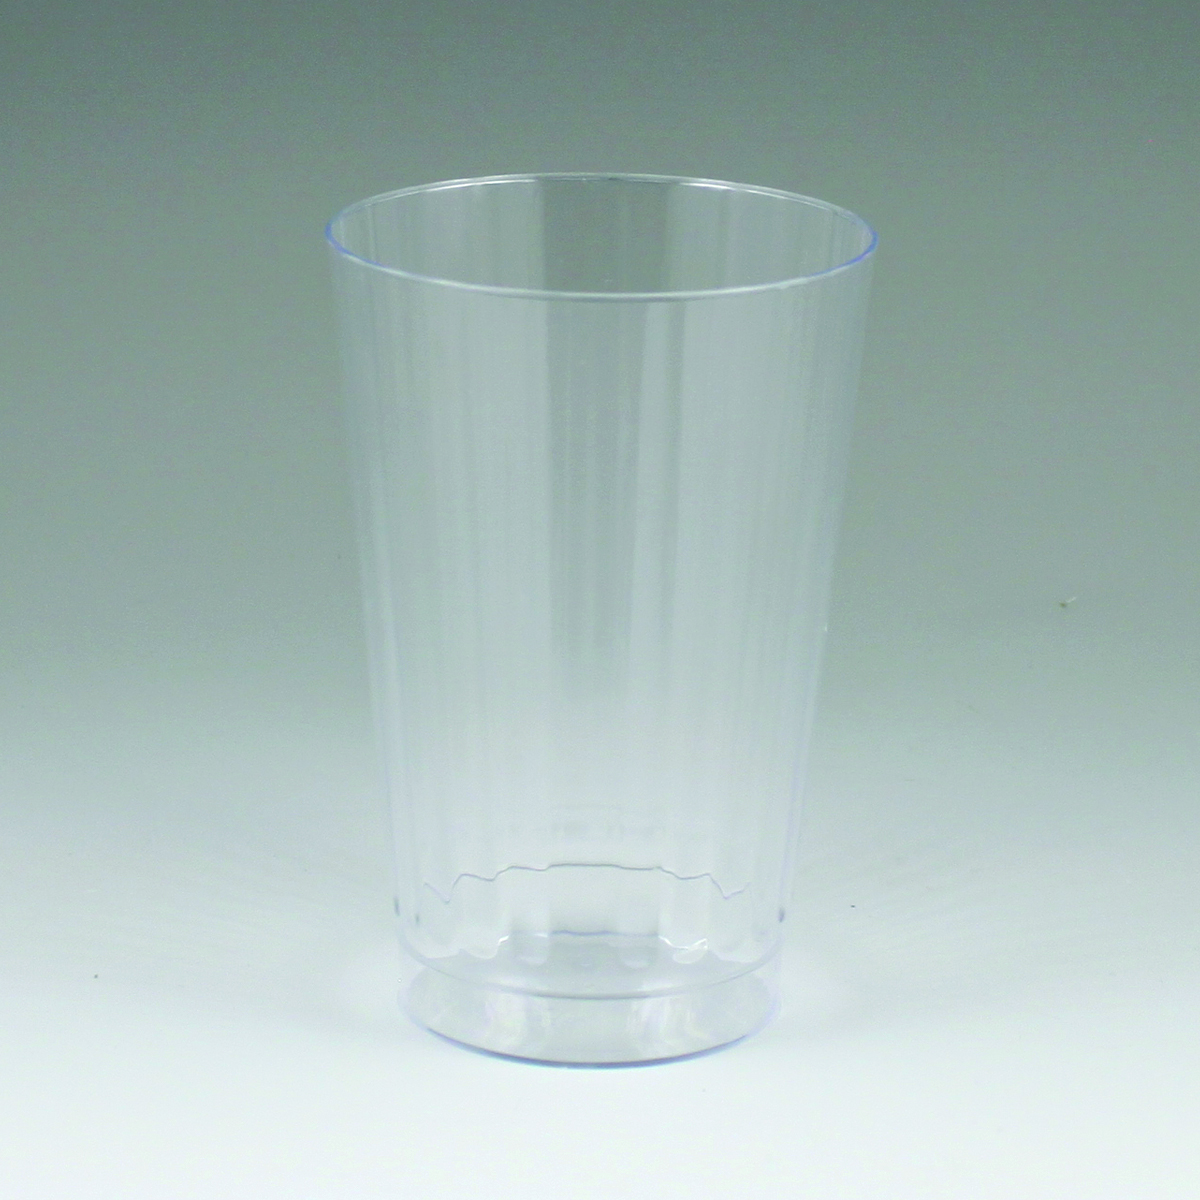 12 oz. Simply Squared Tumbler  Plastic Cups, Utensils, Bowls